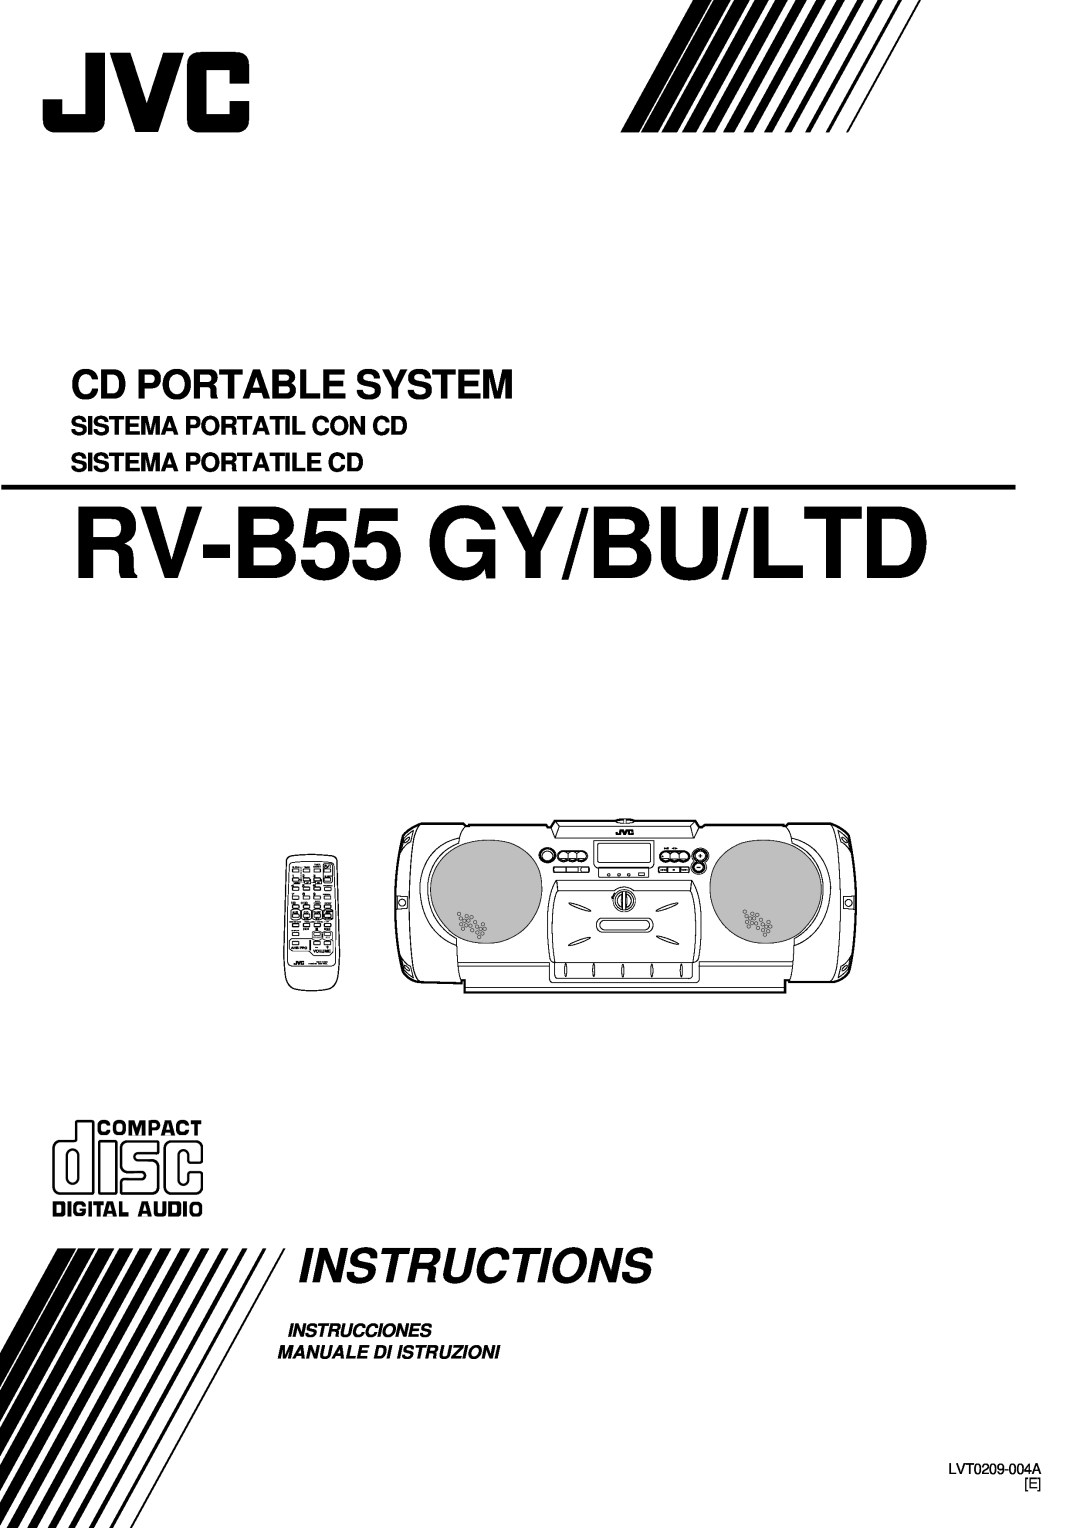 JVC RV-B55 GY/BU/LTD manual Instrucciones Manuale Di Istruzioni, RV-B55GY/BU/LTD, Instructions, Cd Portable System, Sleep 